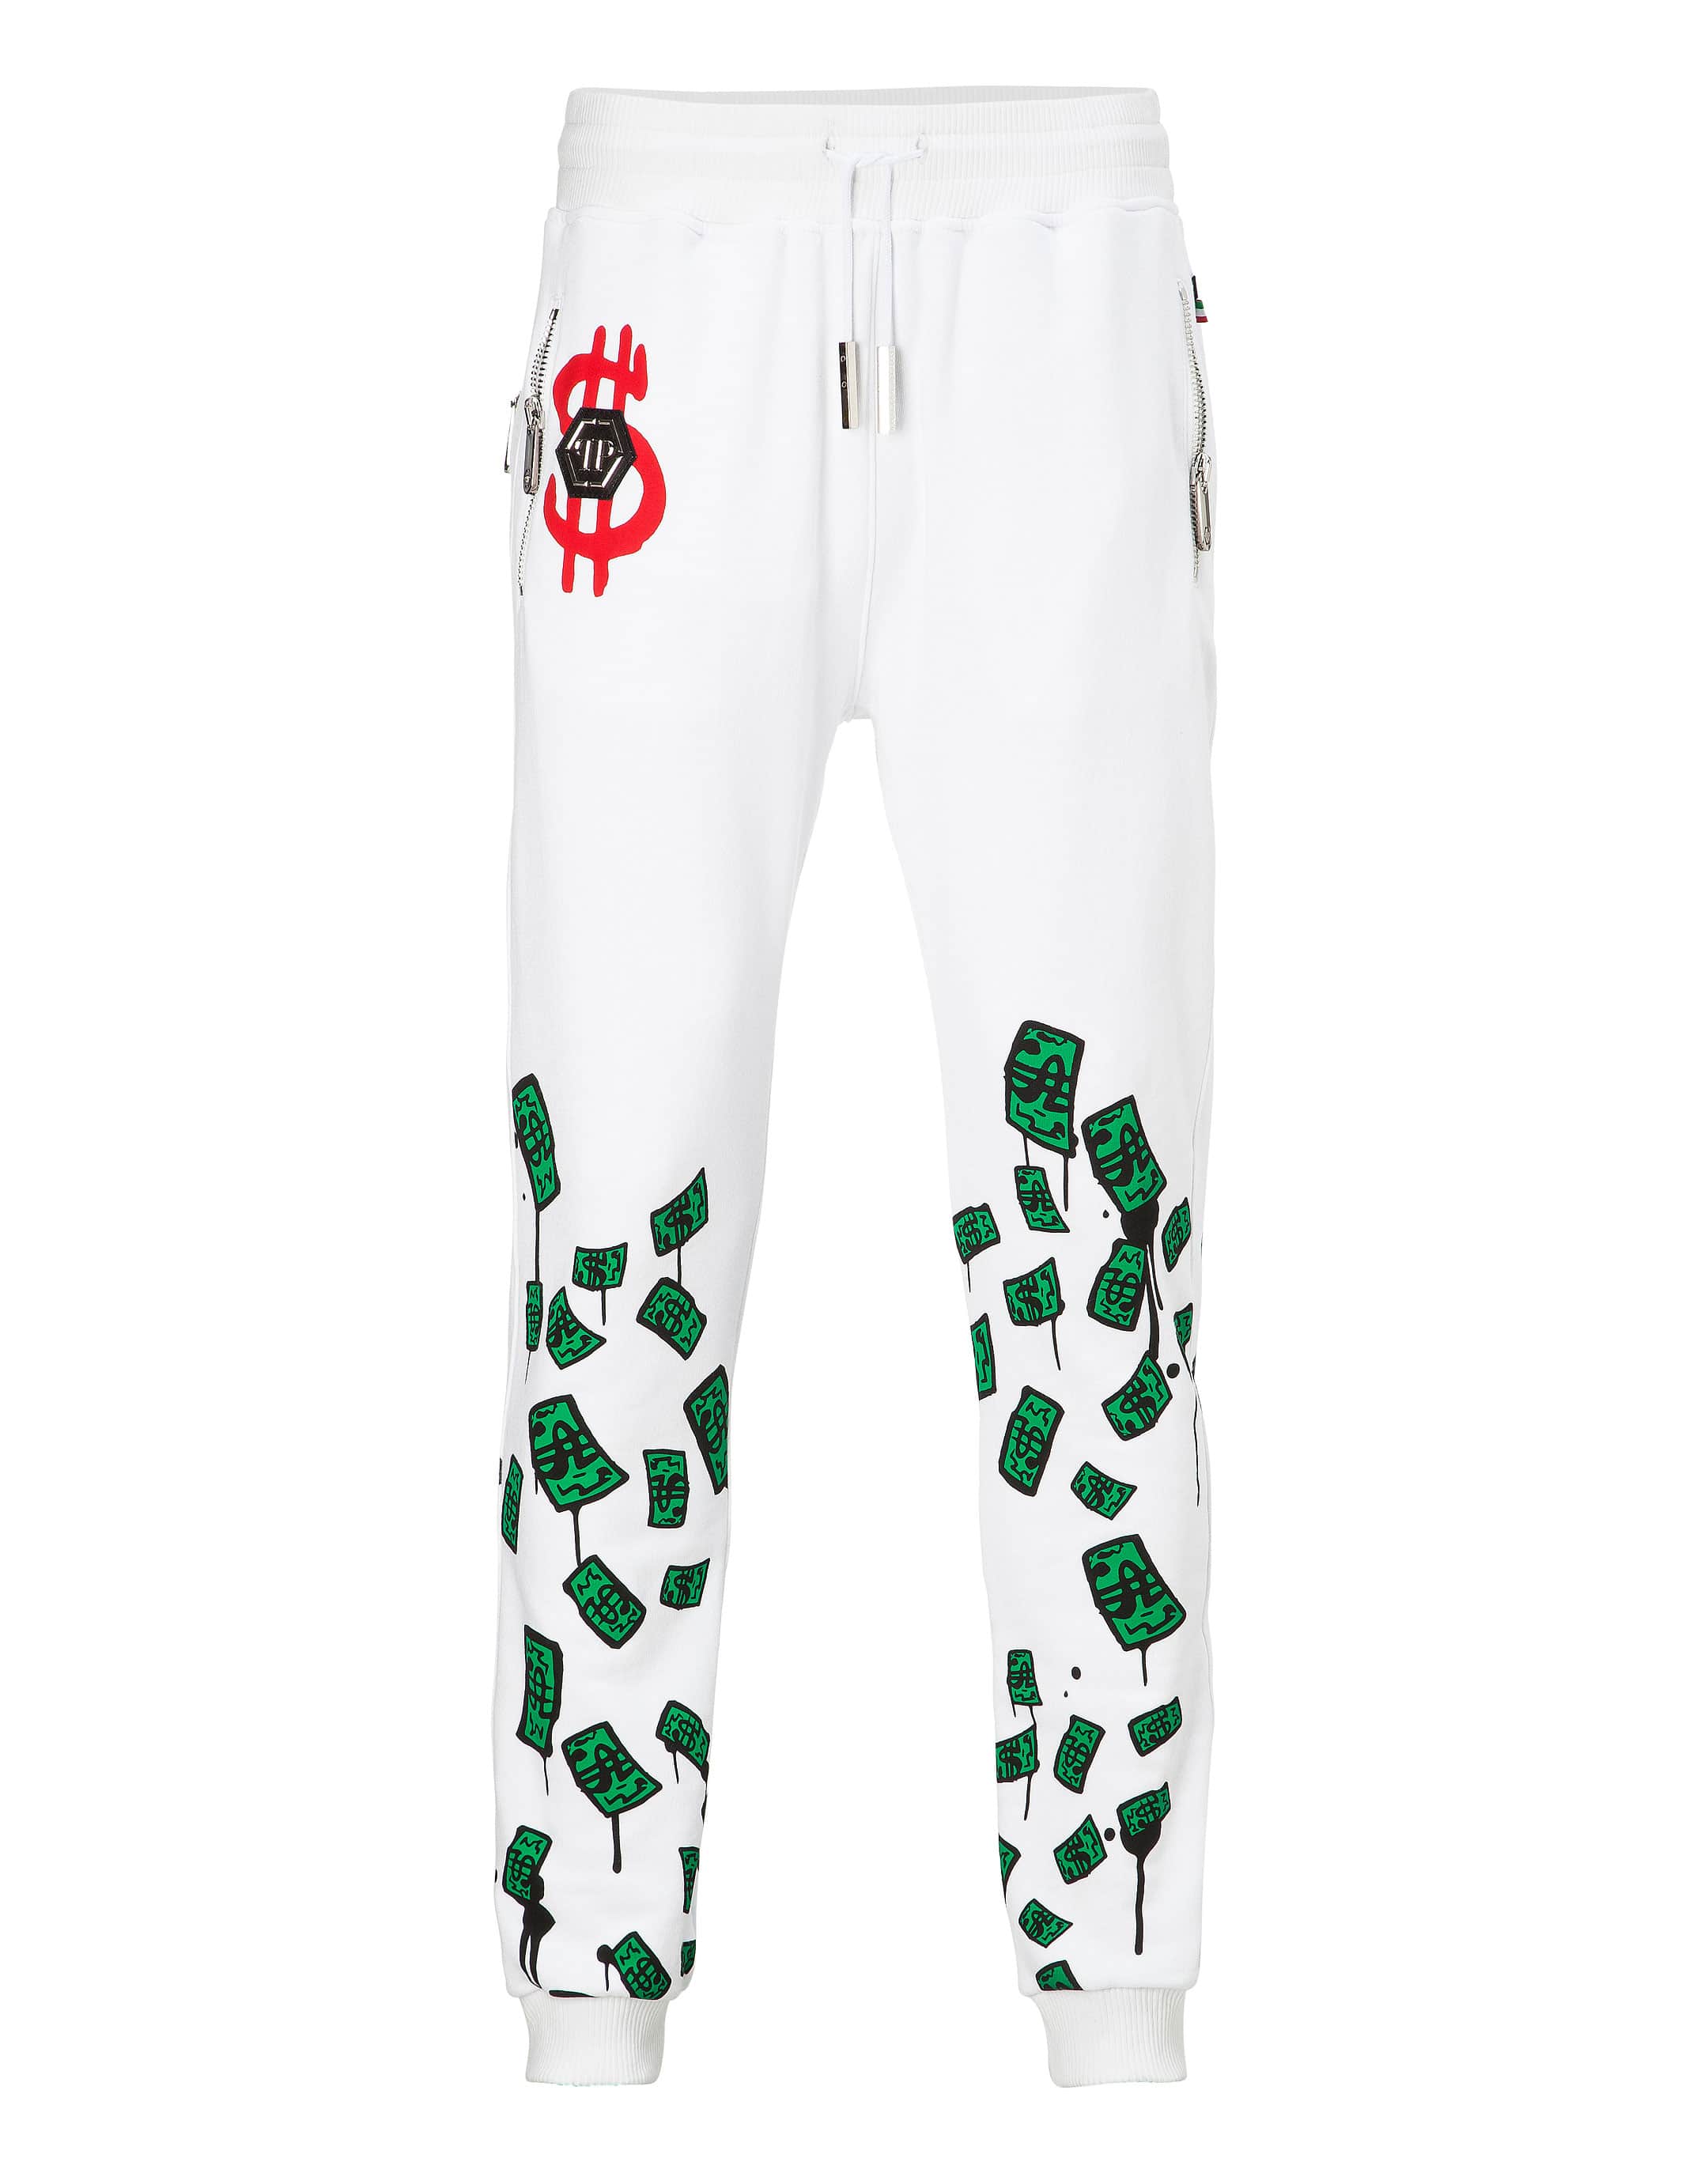 Jogging Trousers "Green money" | Philipp Plein Outlet